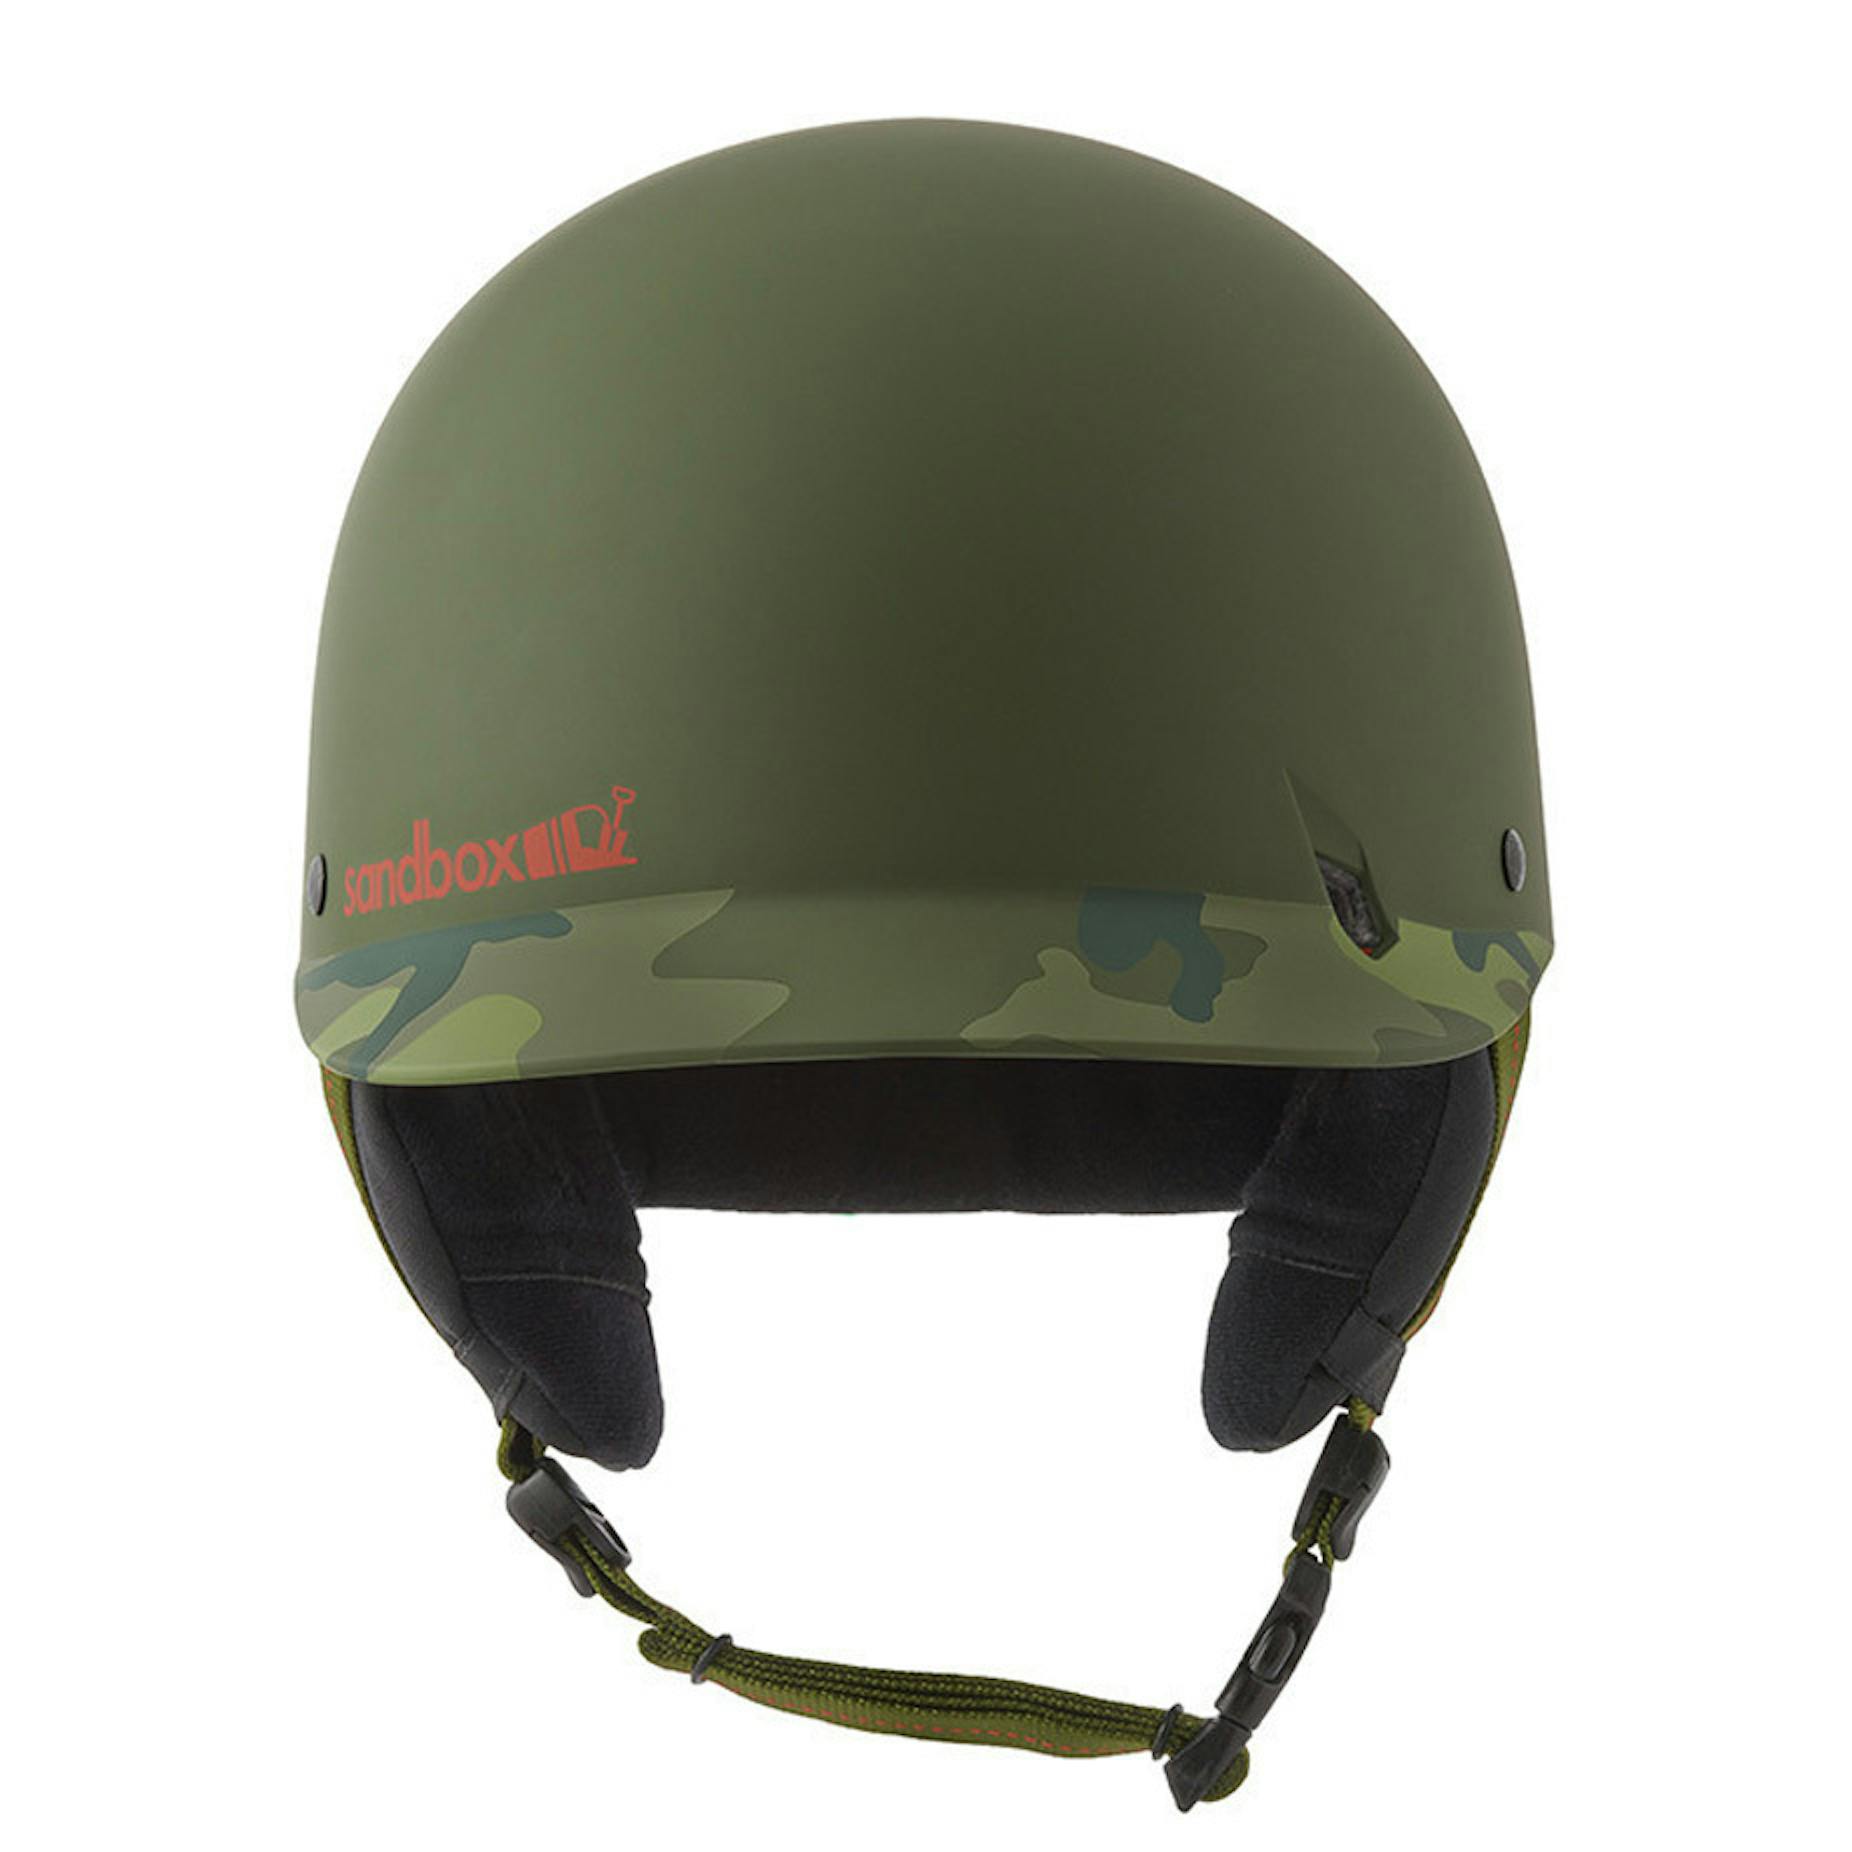 Sandbox Classic 2.0 Snow Helmet - Camo | BOARDWORLD Store